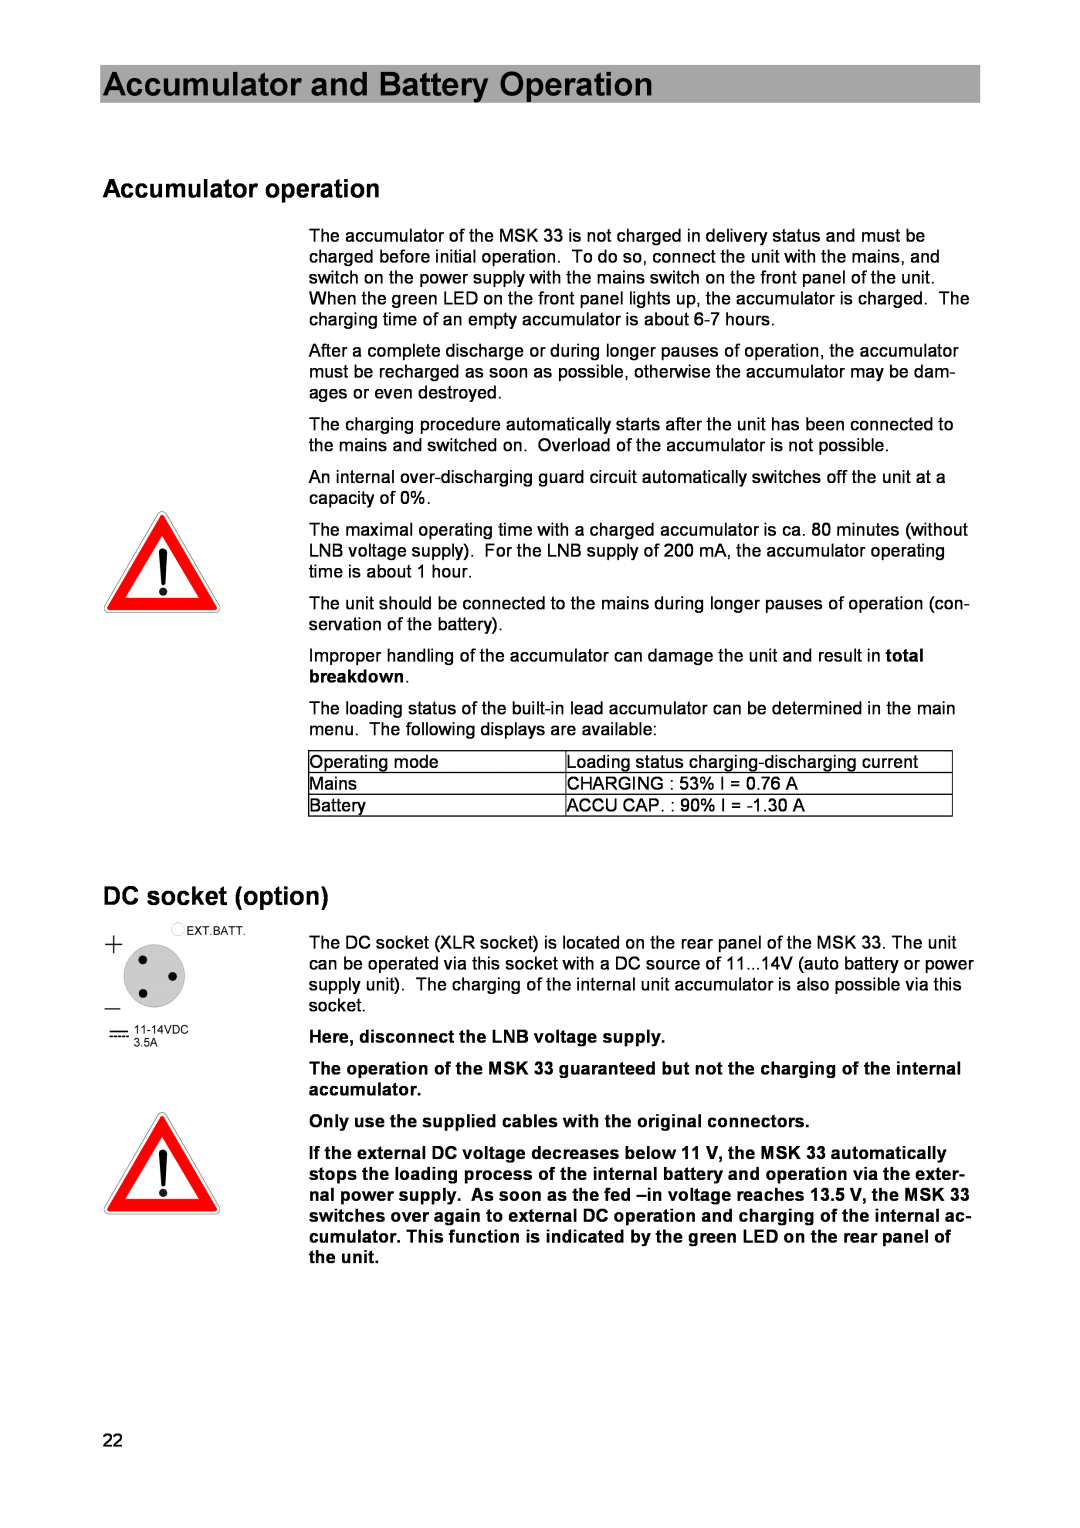 DreamGEAR MSK 33 manual Accumulator and Battery Operation, Accumulator operation, DC socket option 